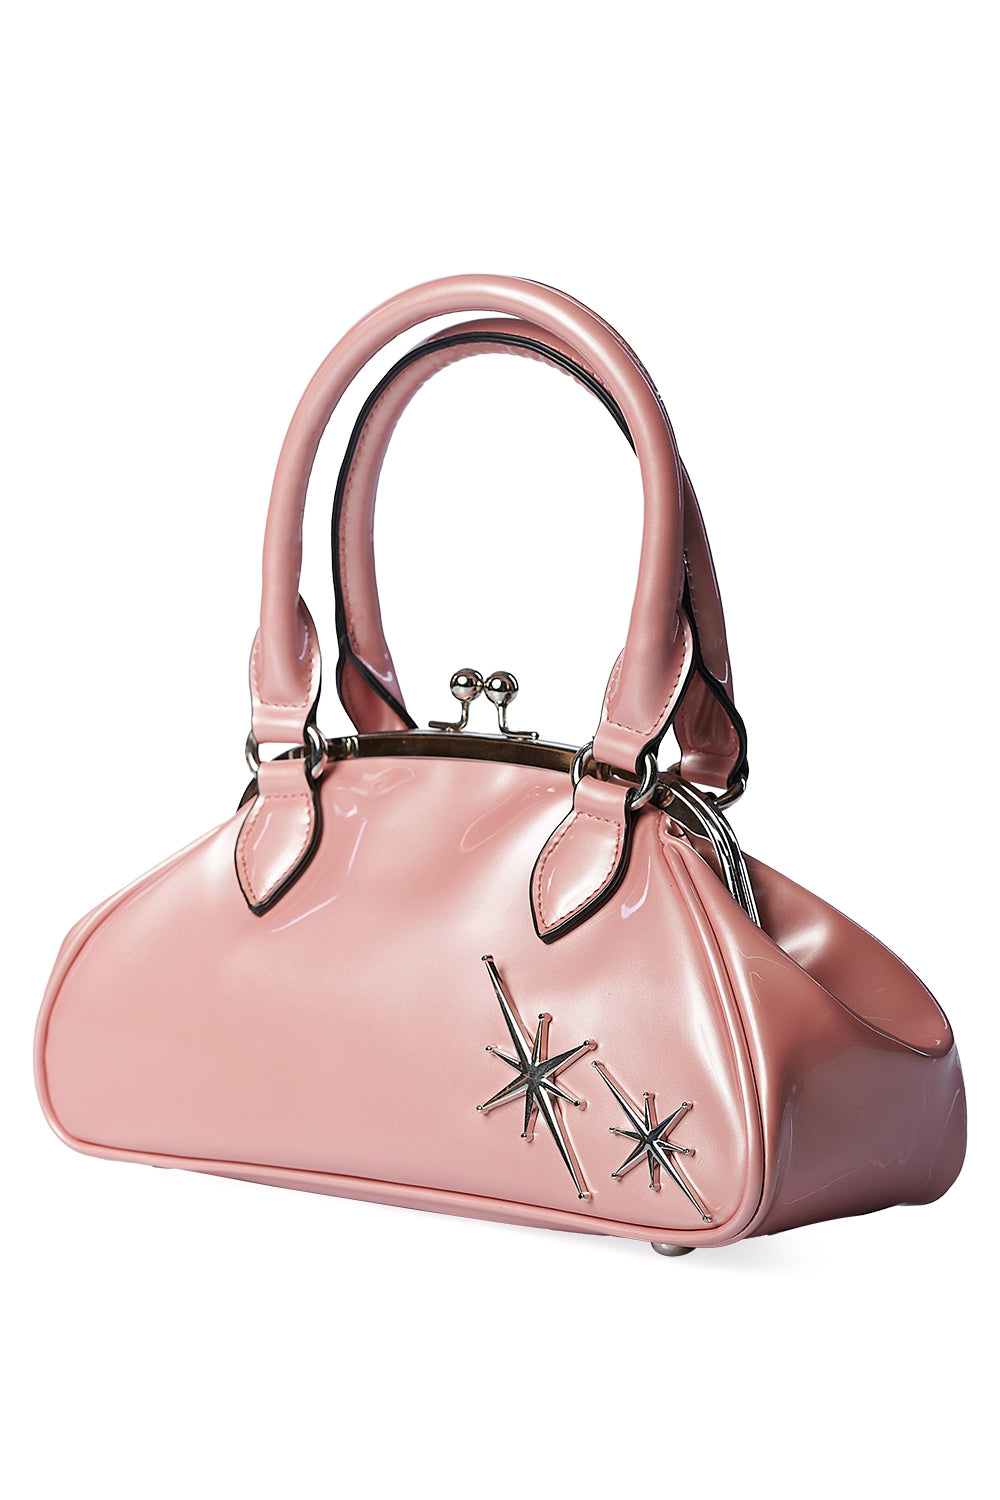 Counting Stars Patent Pink Kiss Lock Handle Bag